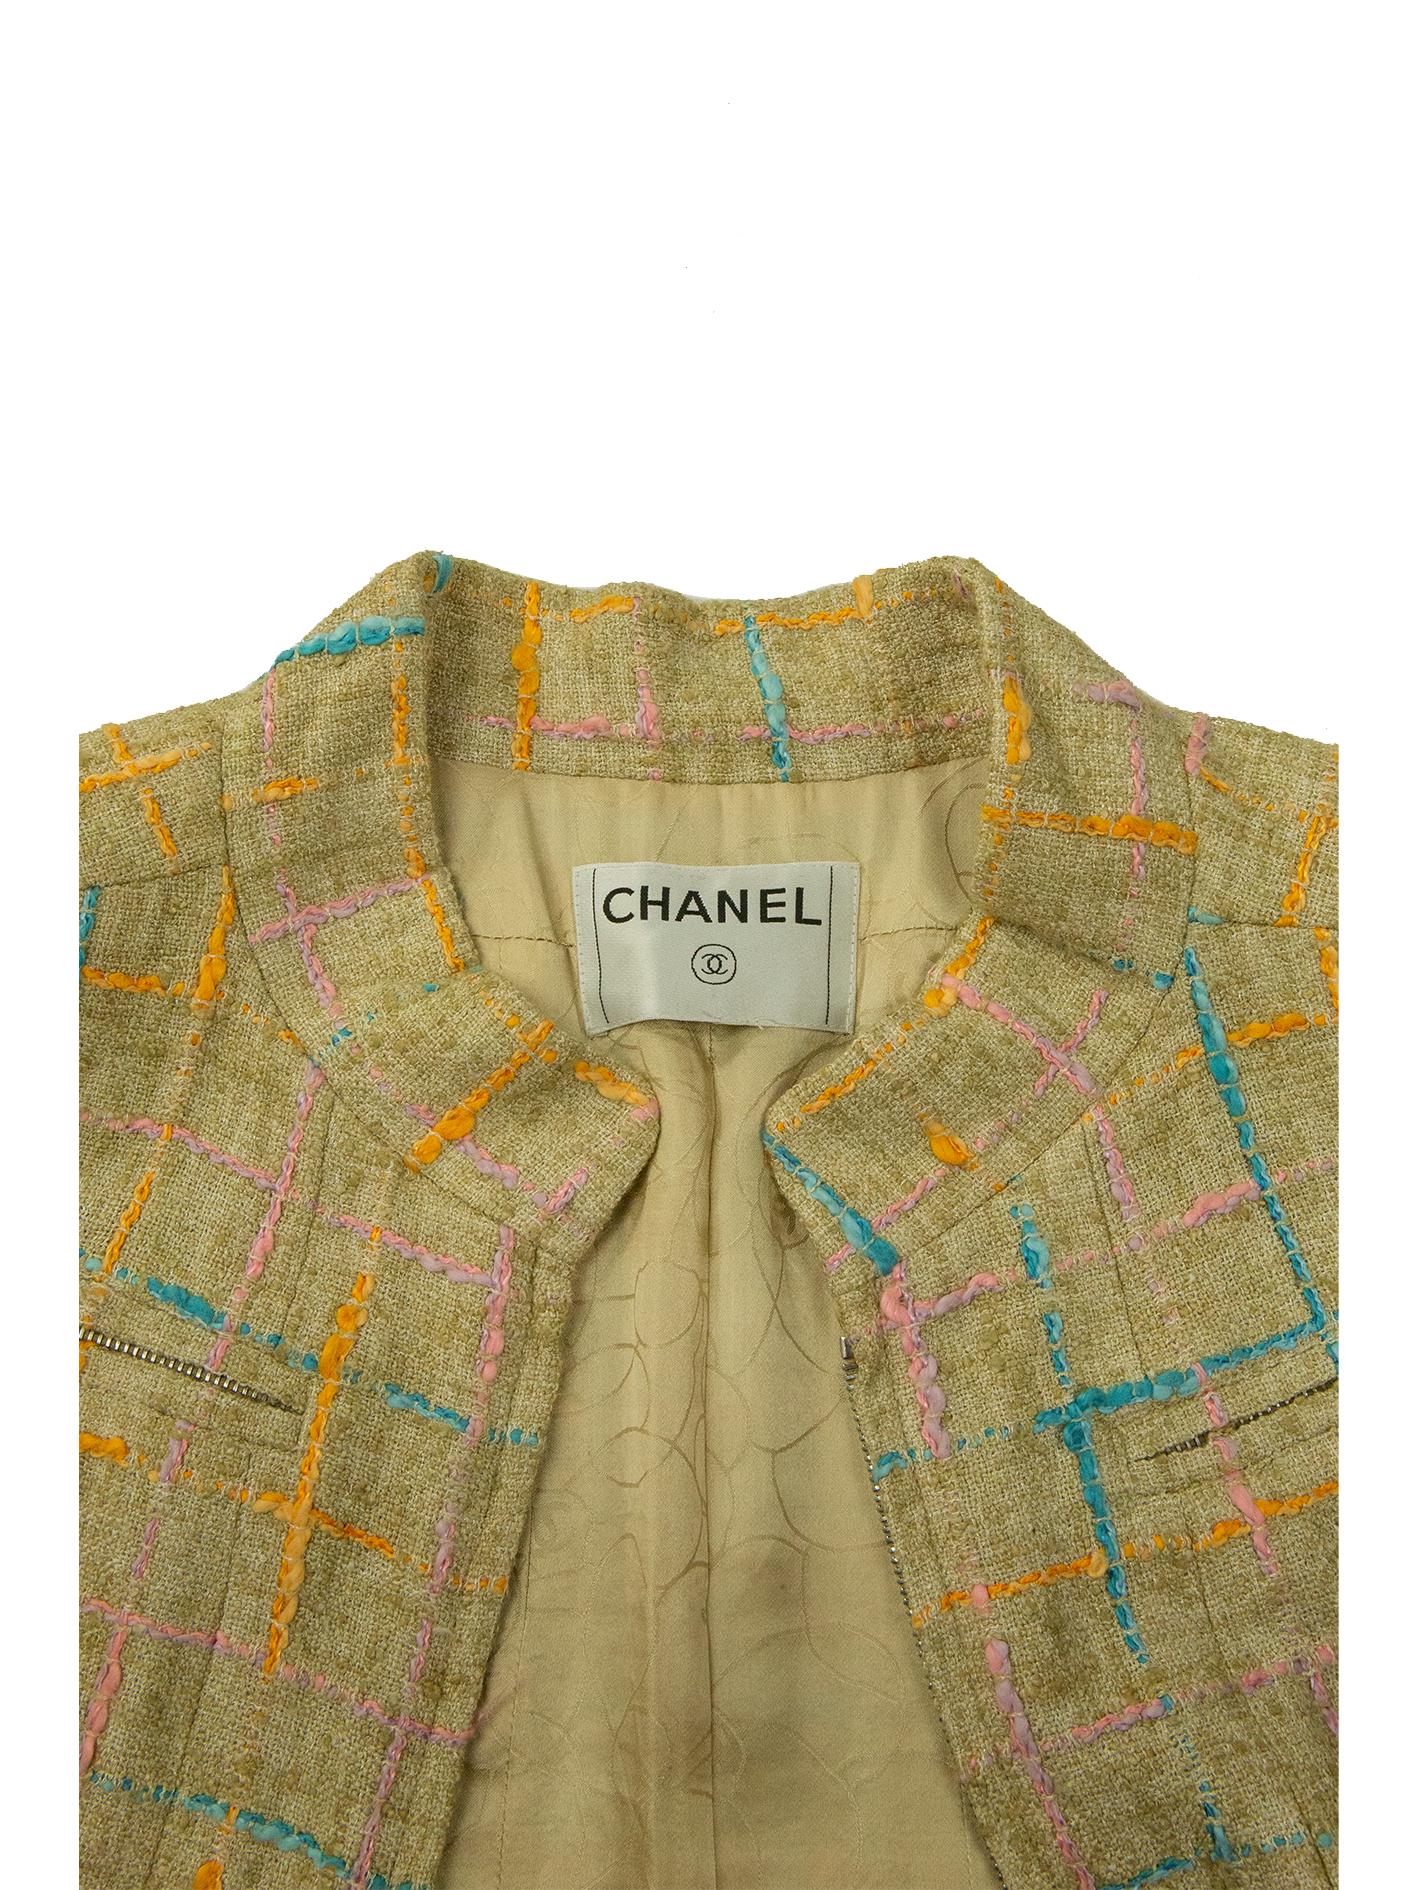 Chanel Beige Coat For Sale 4